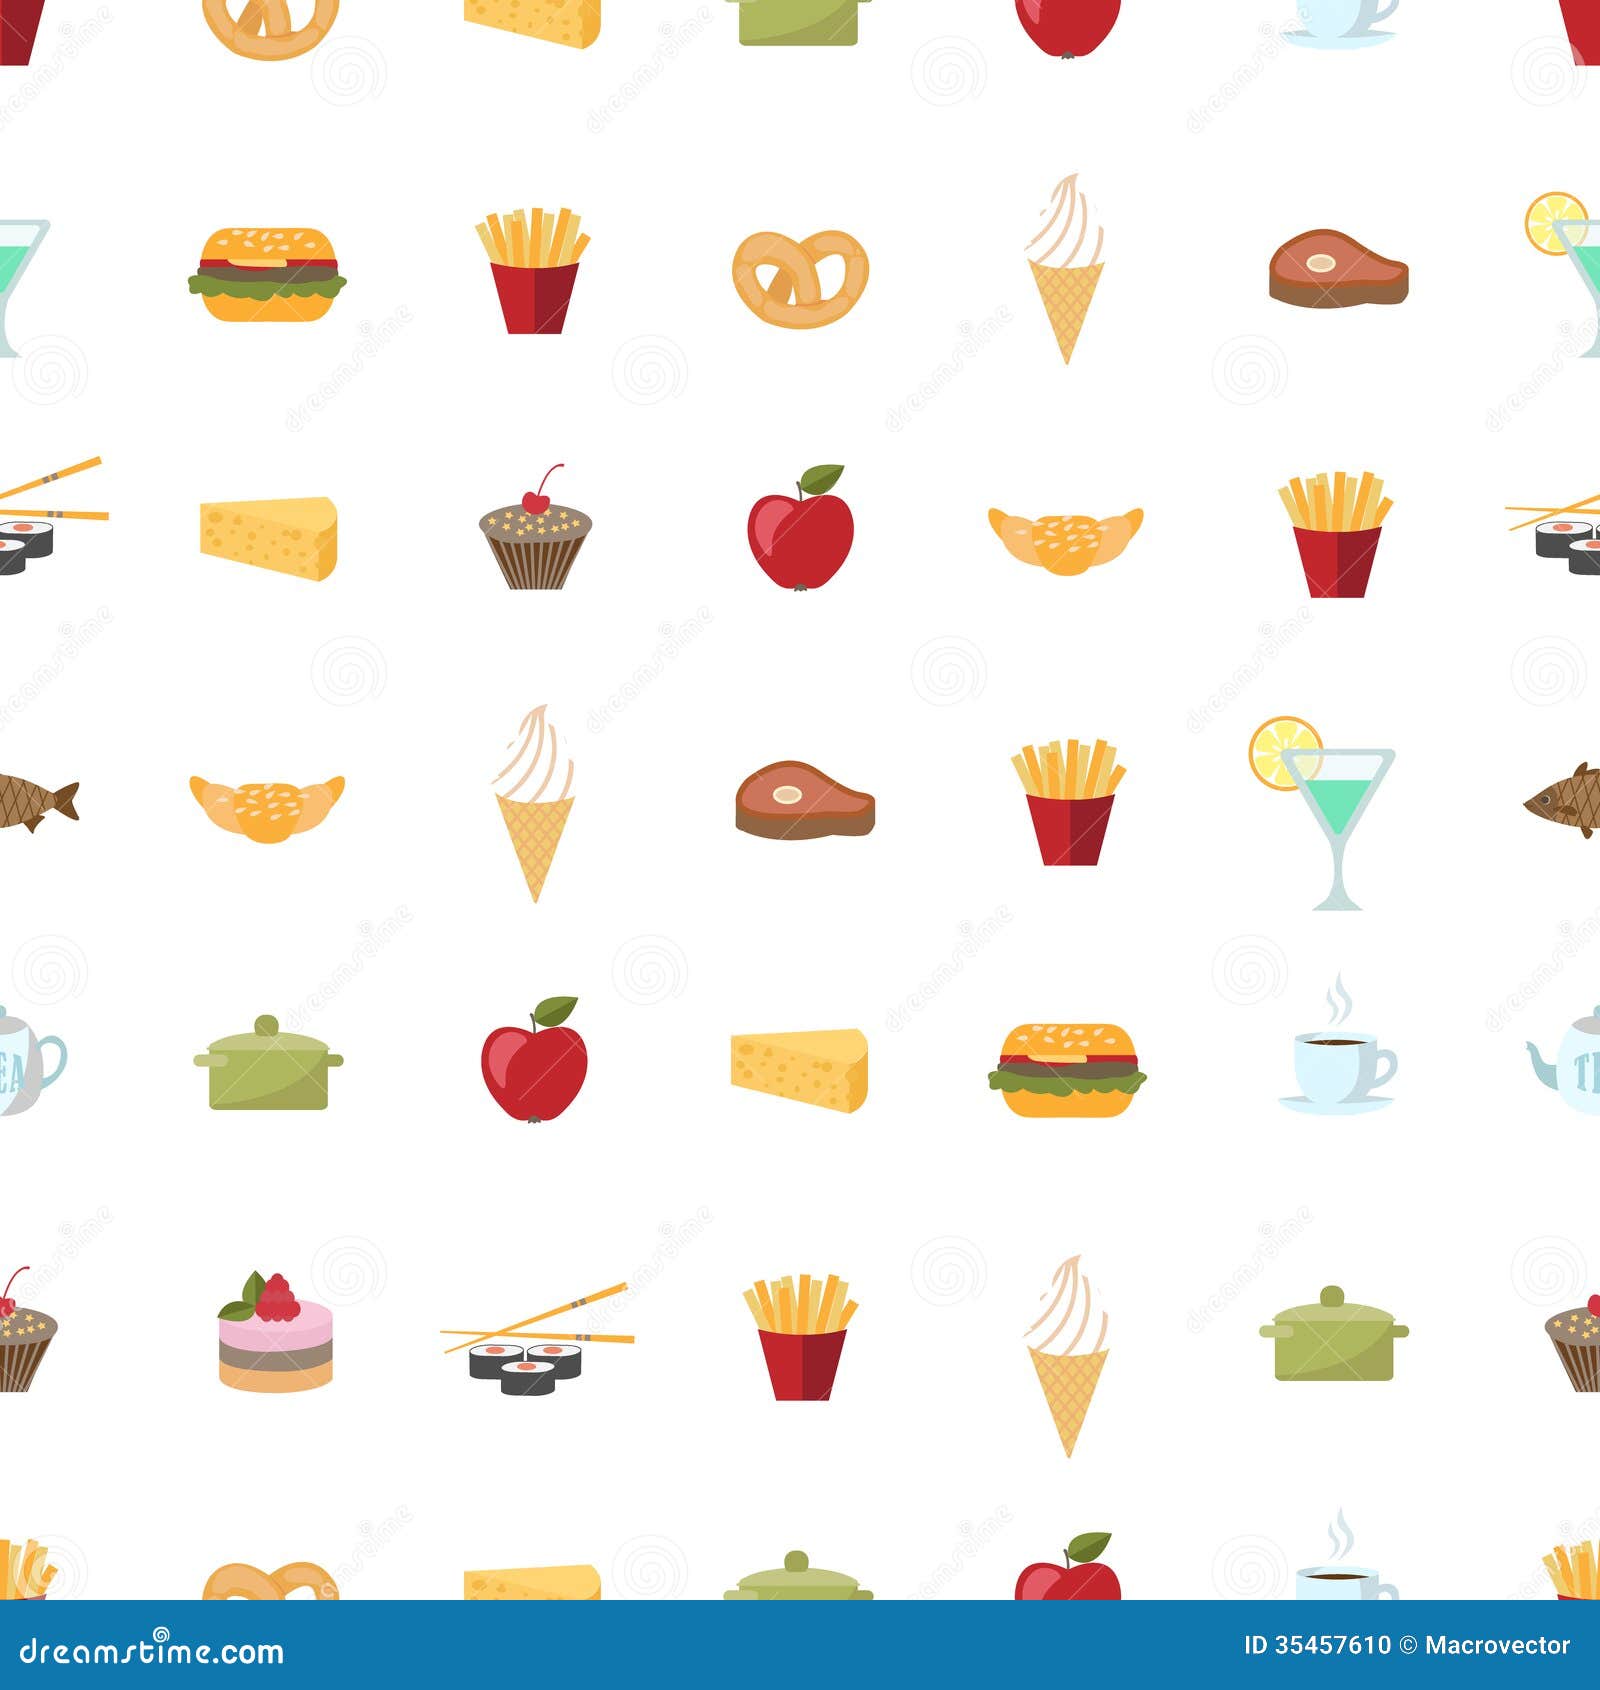 tumblr backgrounds stylish Image: Stock  Pattern 35457610 Photo  Background Seamless Food